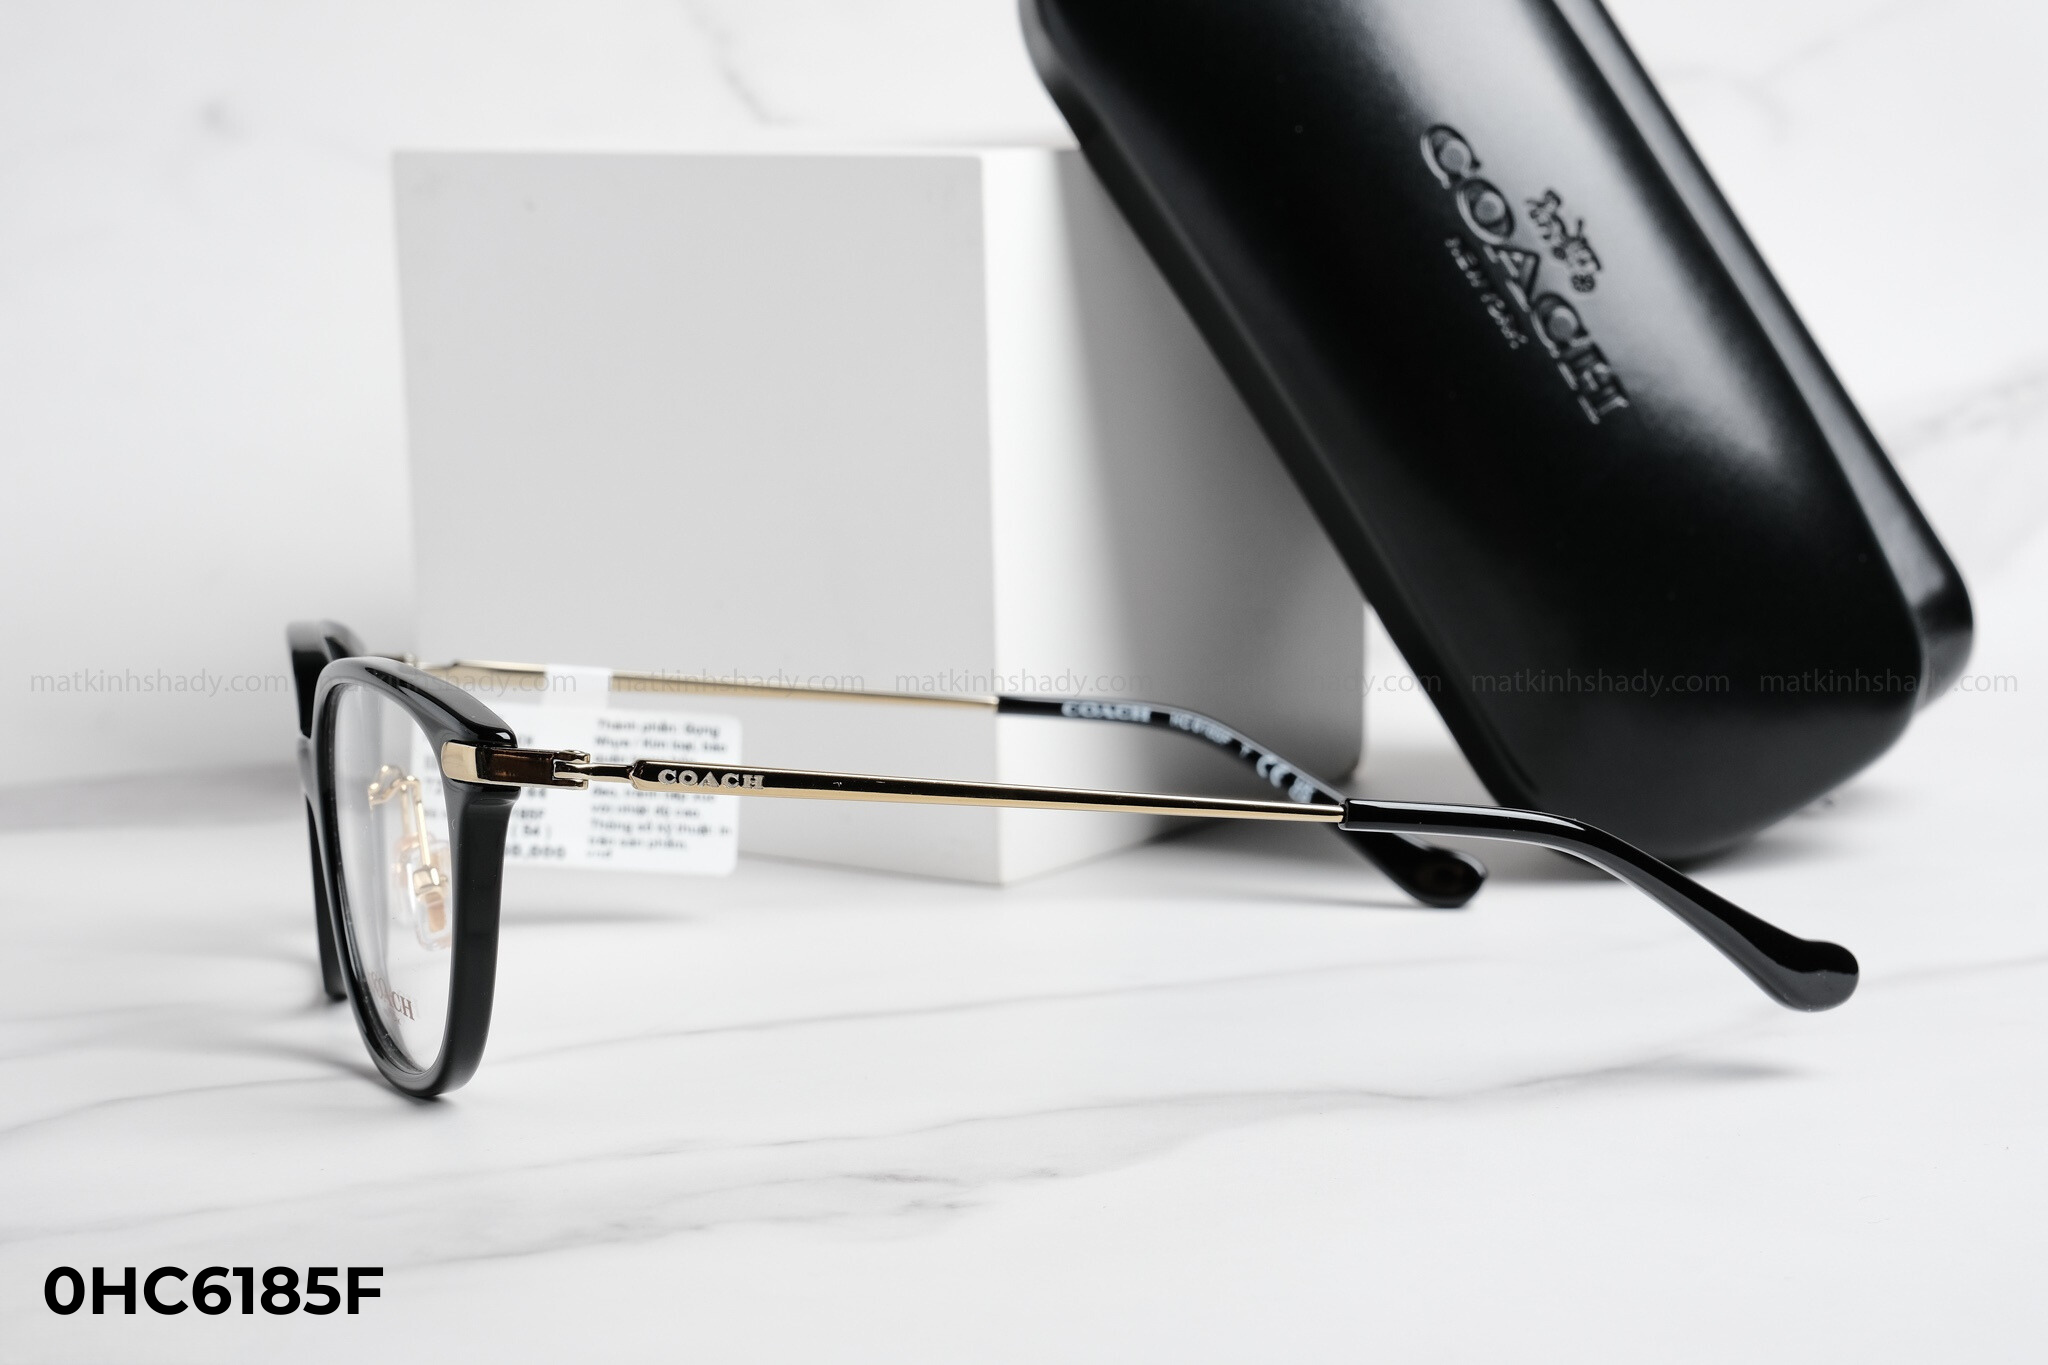  Coach Eyewear - Glasses - 0HC6185F 